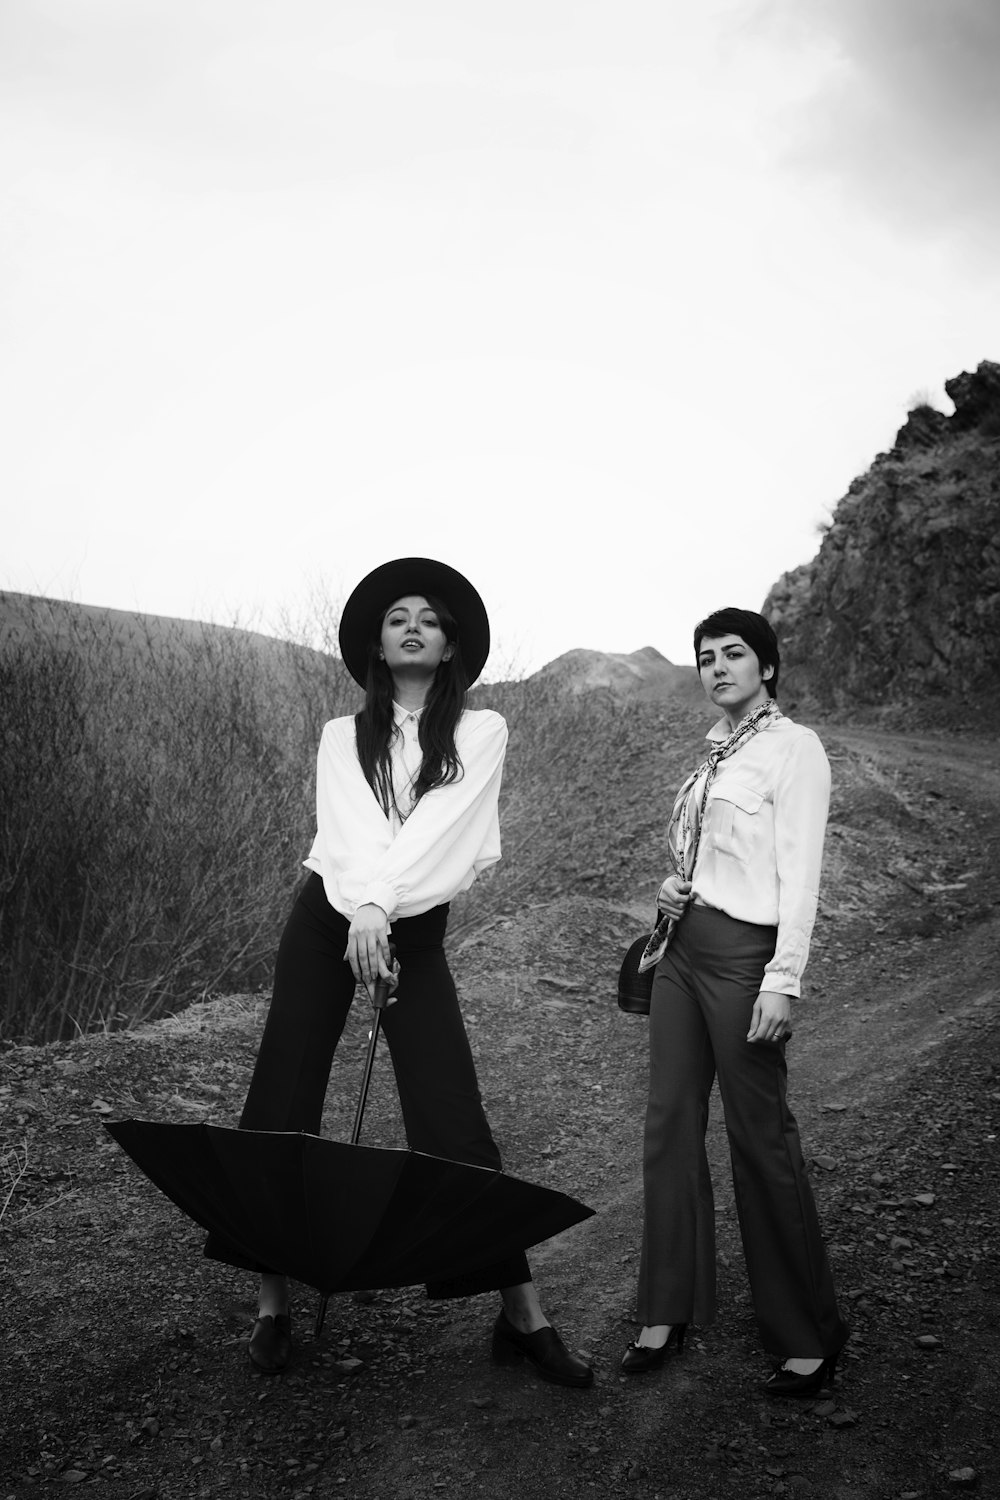 2 women standing on grass field during daytime